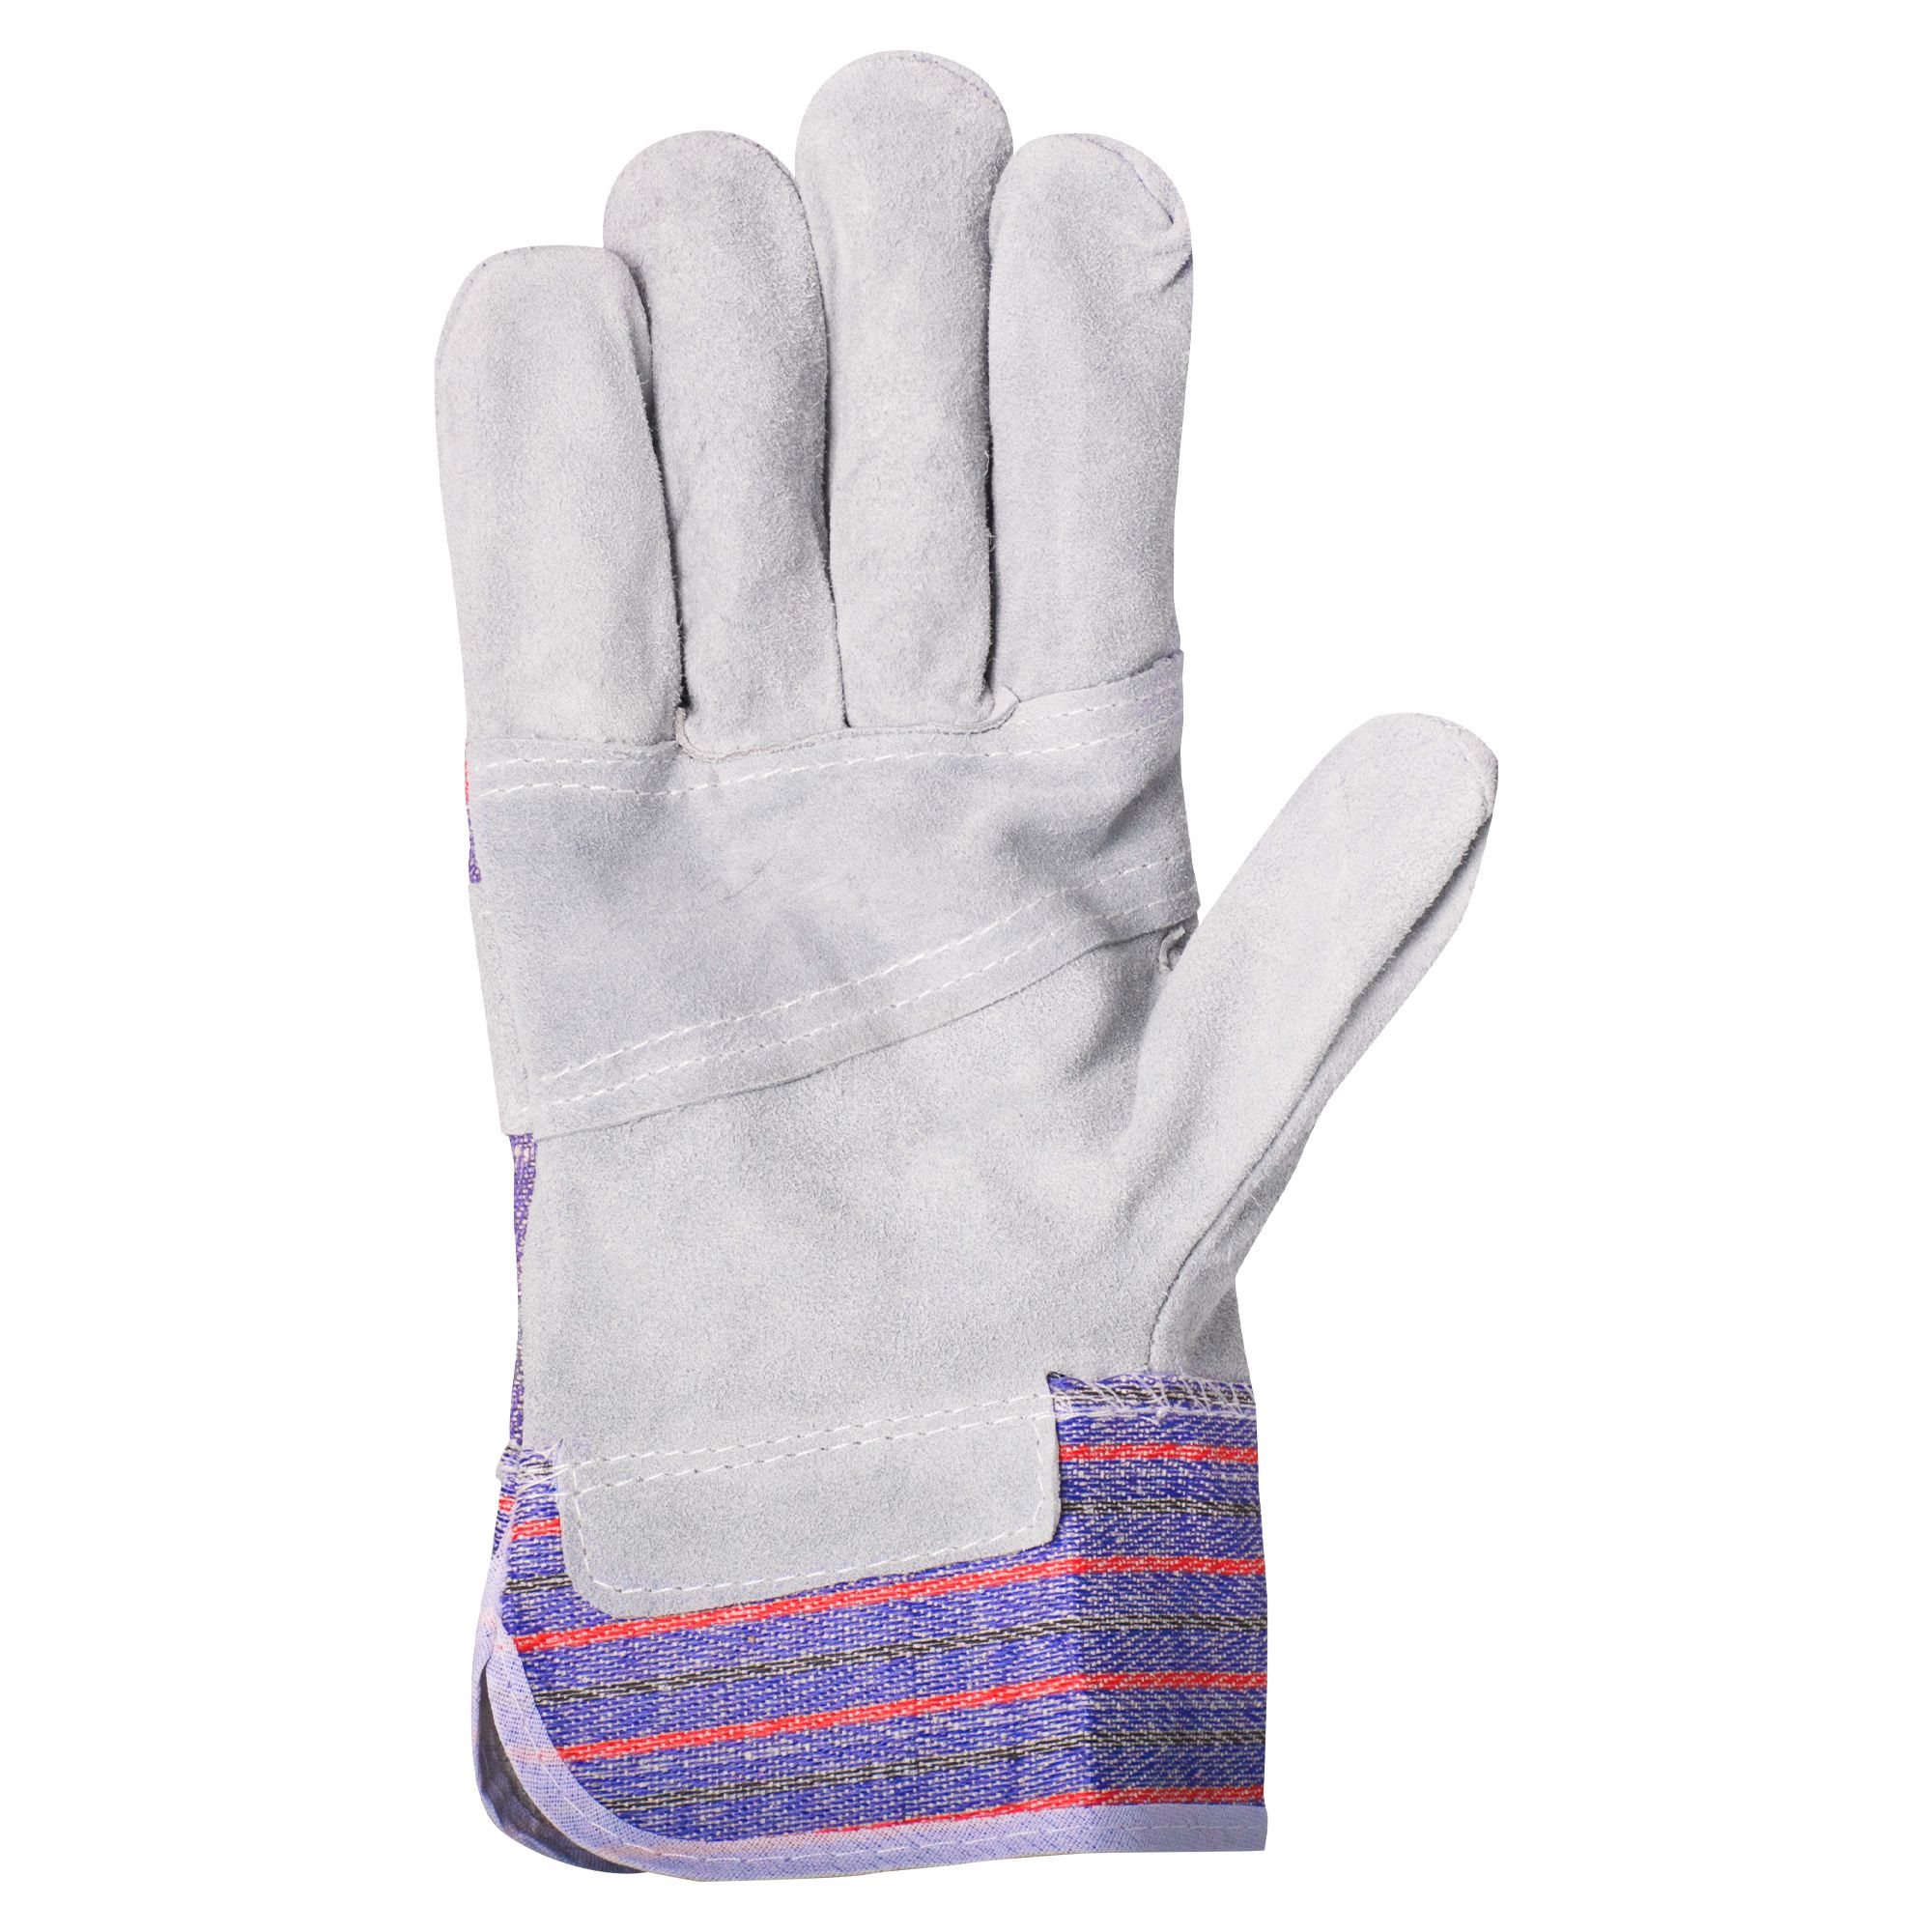 Horizon Cotton Back Economy Cowsplit Palm Leather Work Gloves